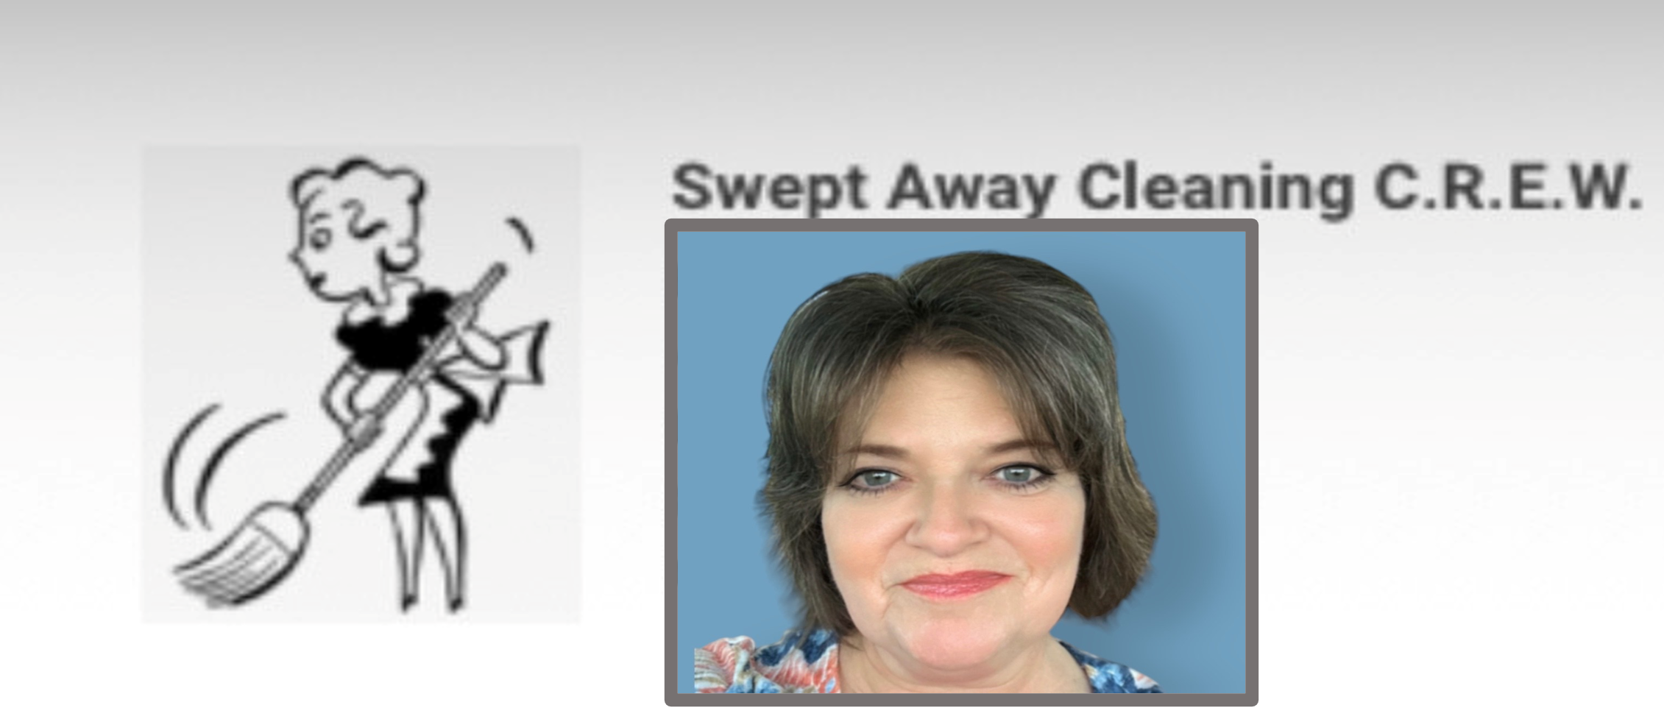 Swept Away Cleaning Crew owner Eva Williams